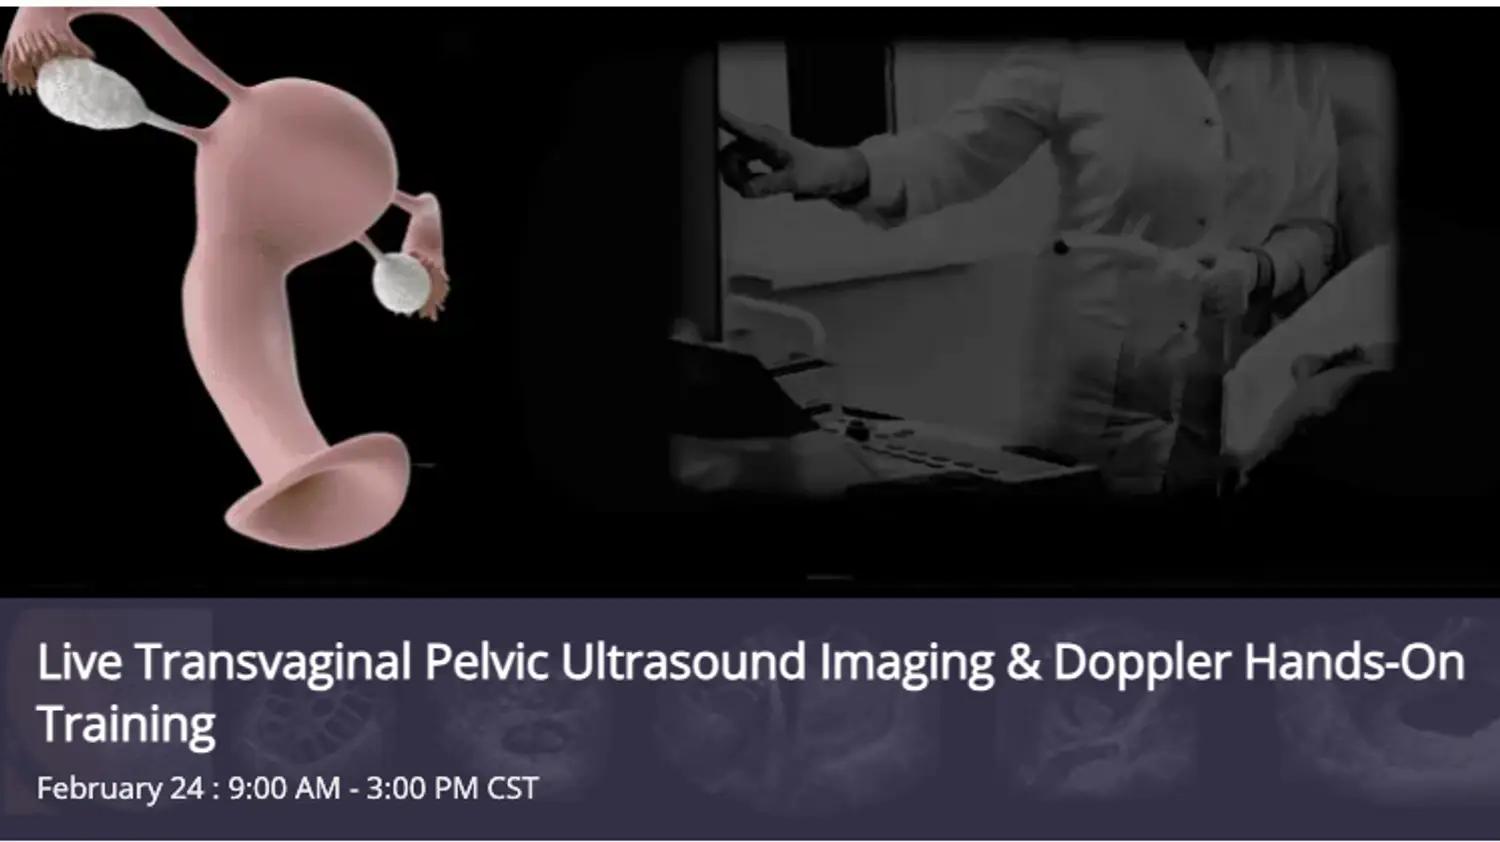 Live Transvaginal Pelvic Ultrasound Imaging & Doppler Hands-On Training